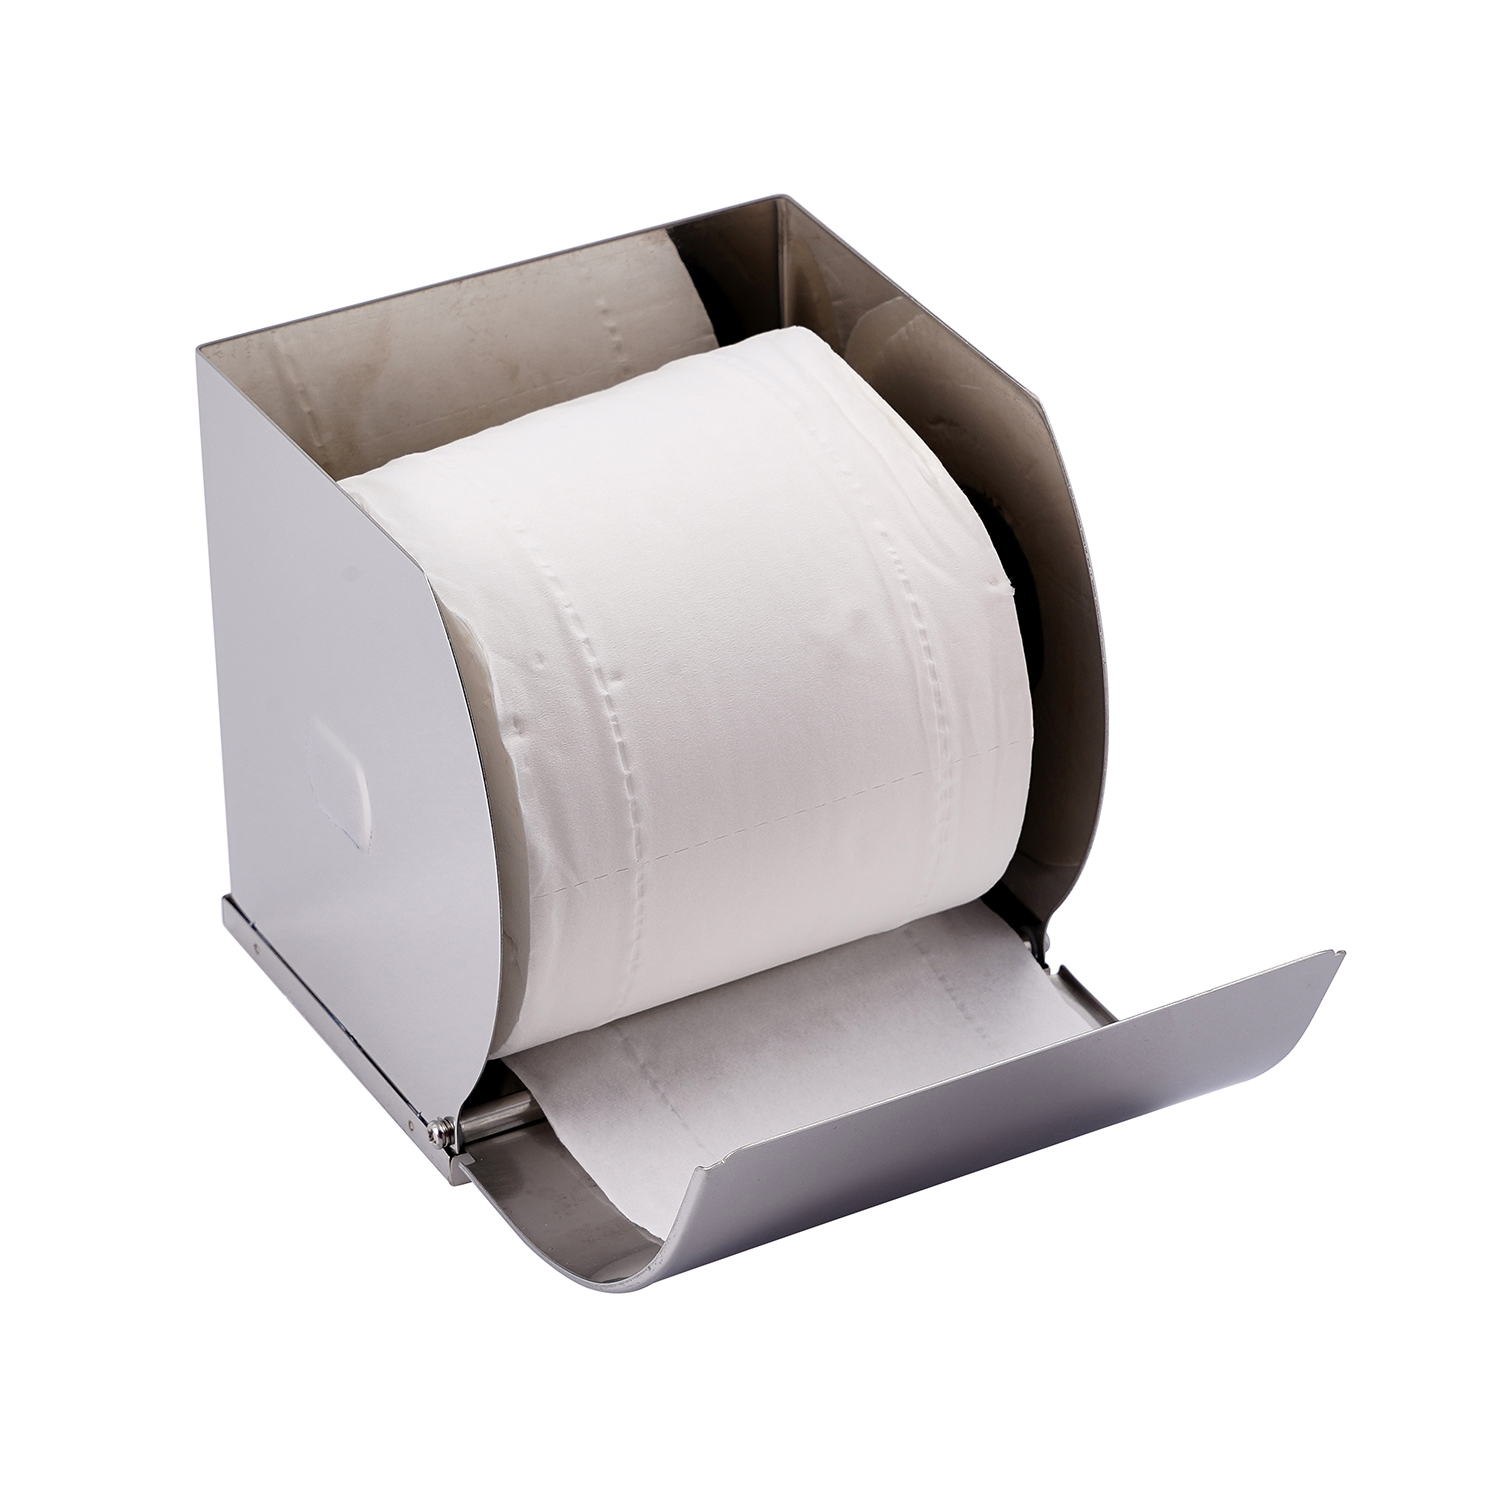 Stainless Steel Waterproof Paper Roll Holder